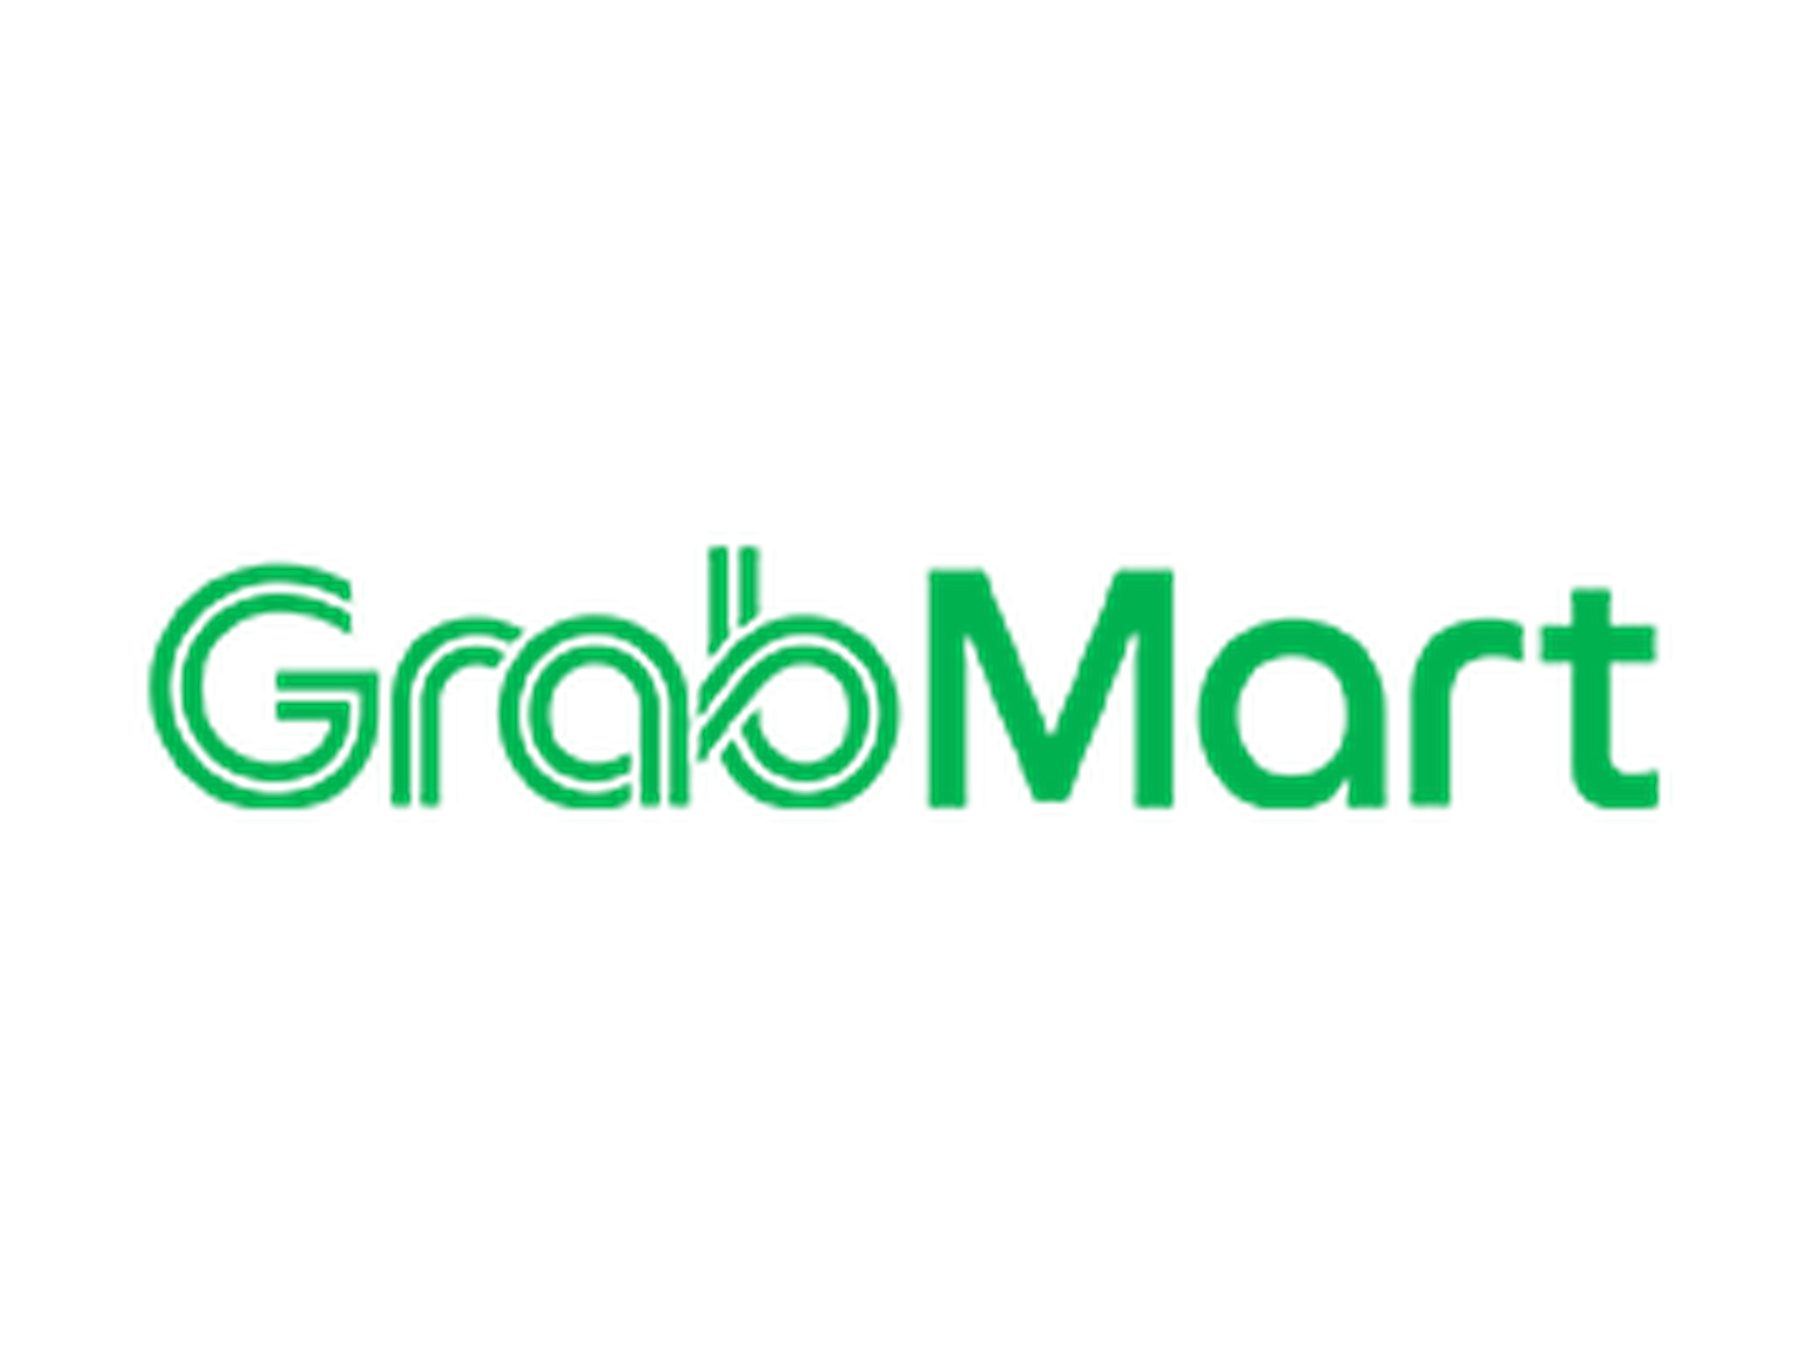 GrabMart Promo Code